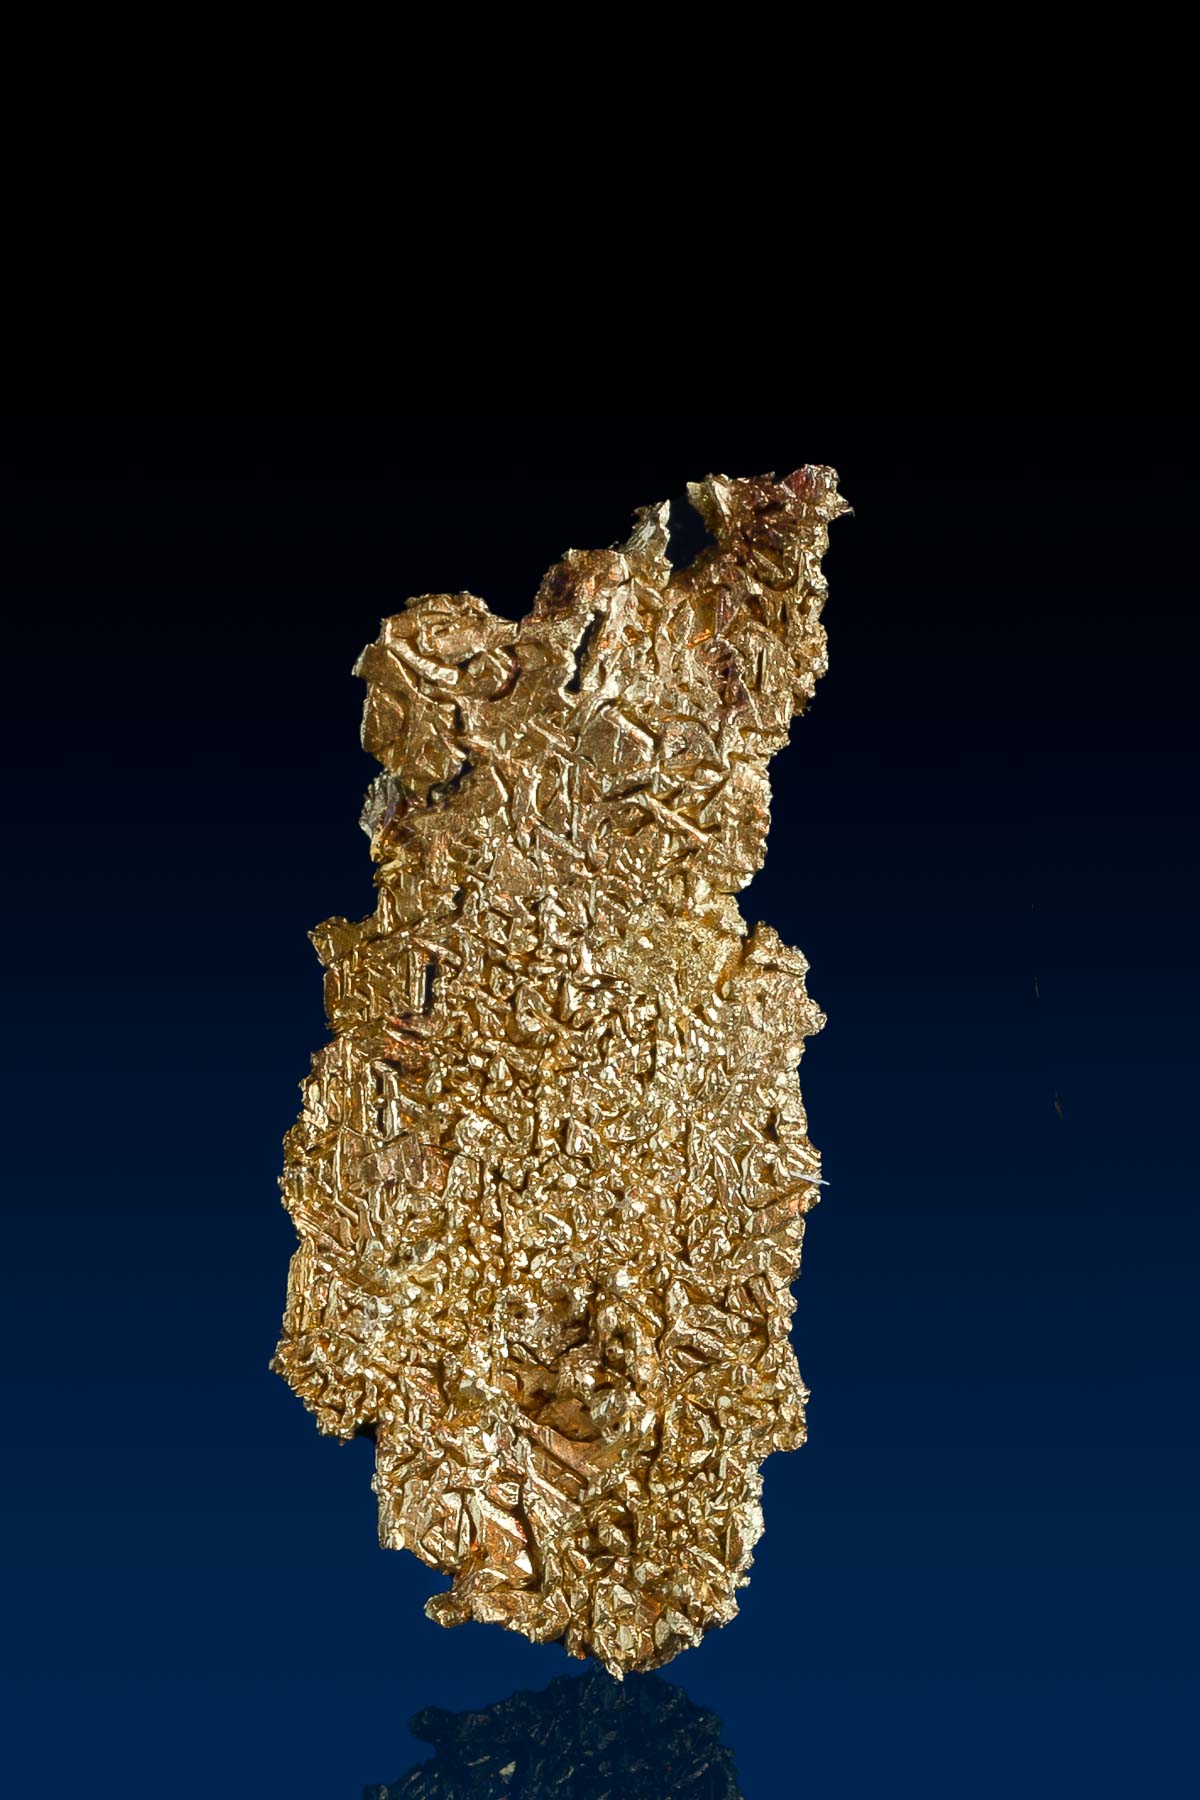 Brilliant Crystallized Gold Specimen from Breckenridge, CO